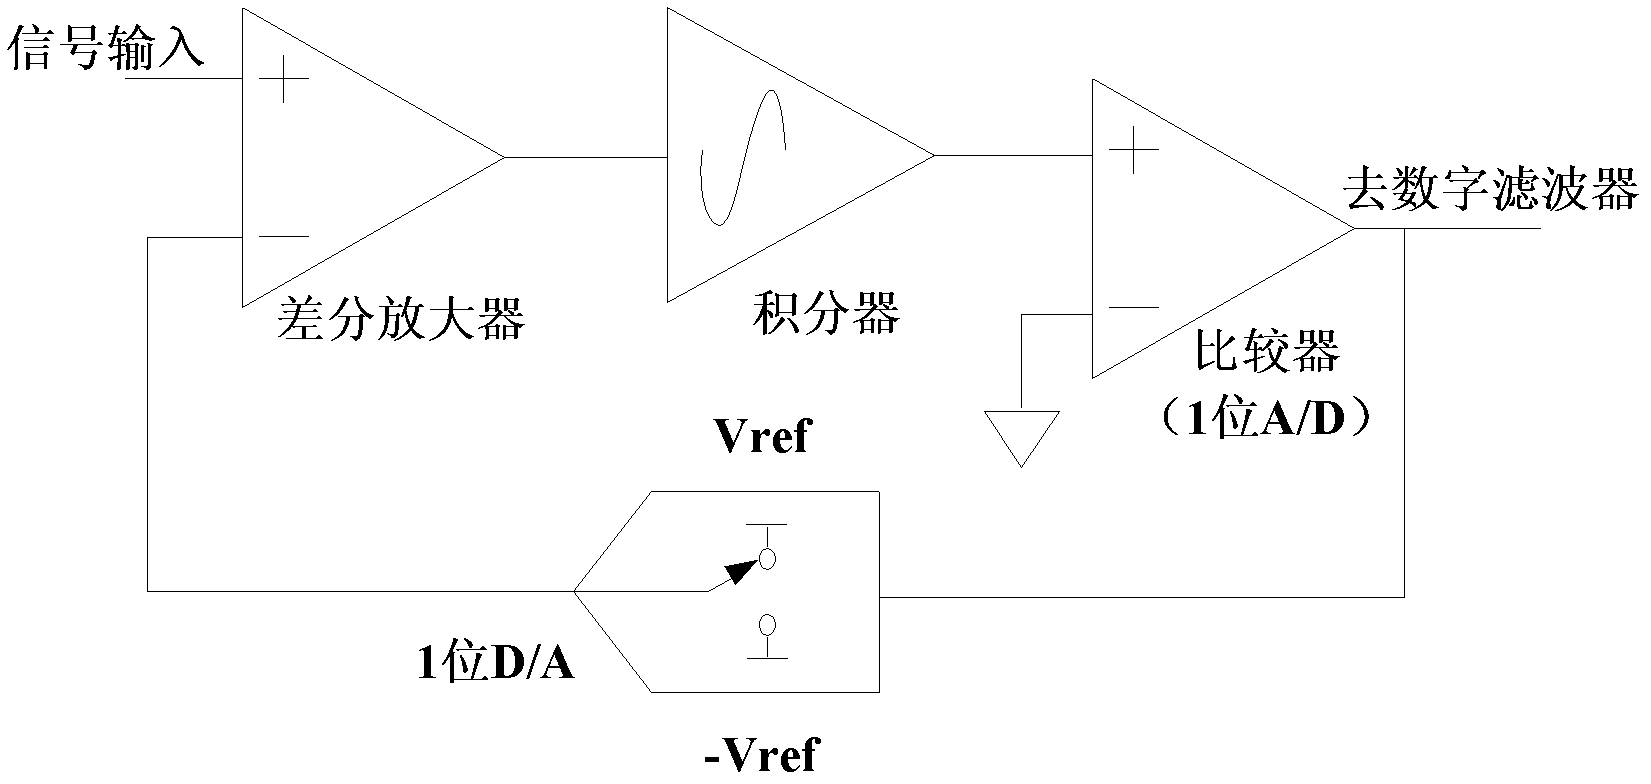 Digital-analog hybrid demodulator and demodulation method